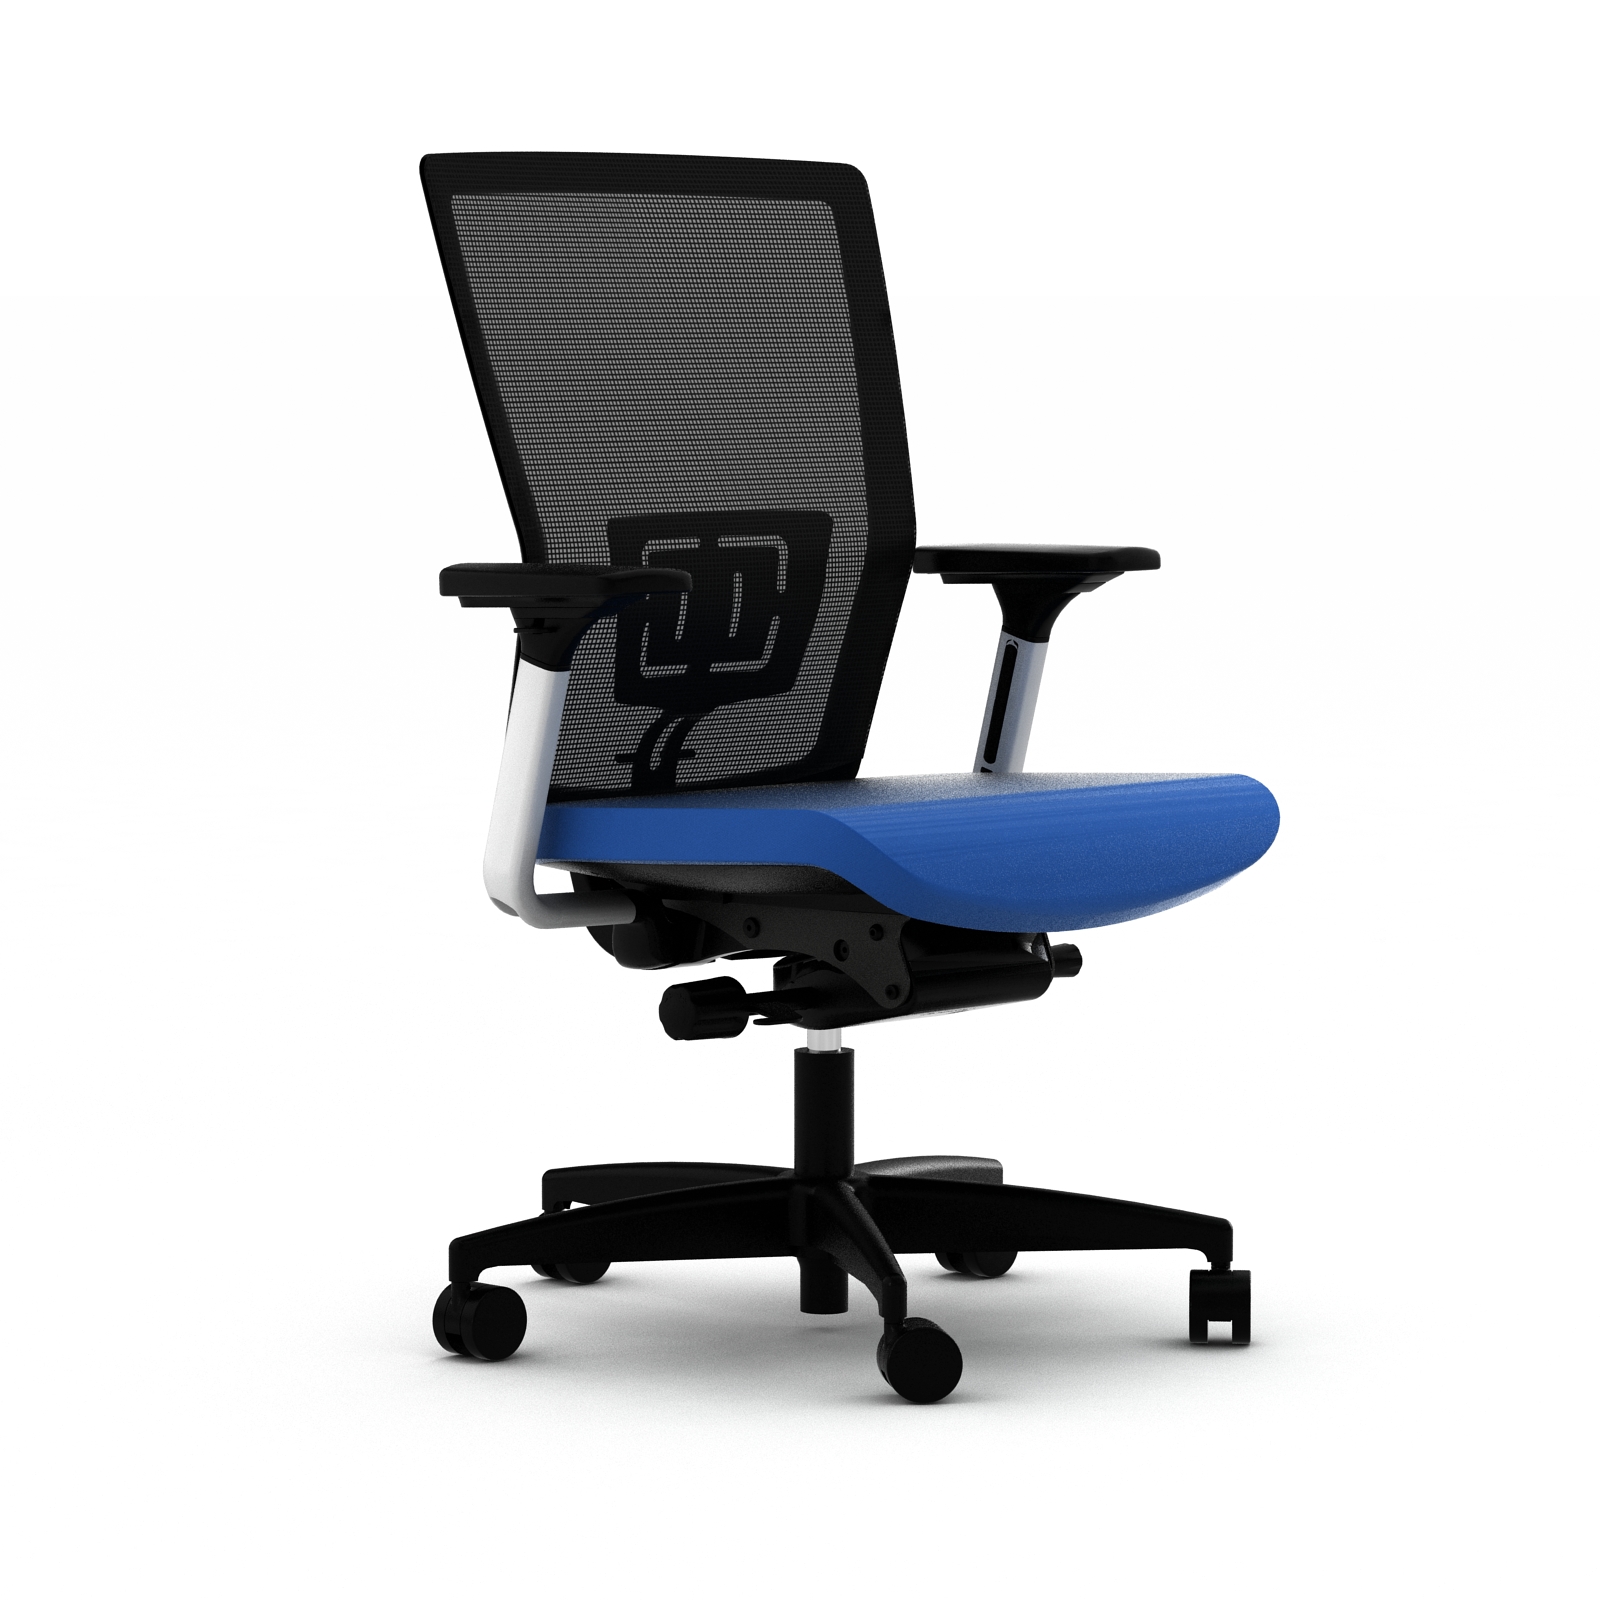 Presav2 office chair in blue seat with MC mechanism